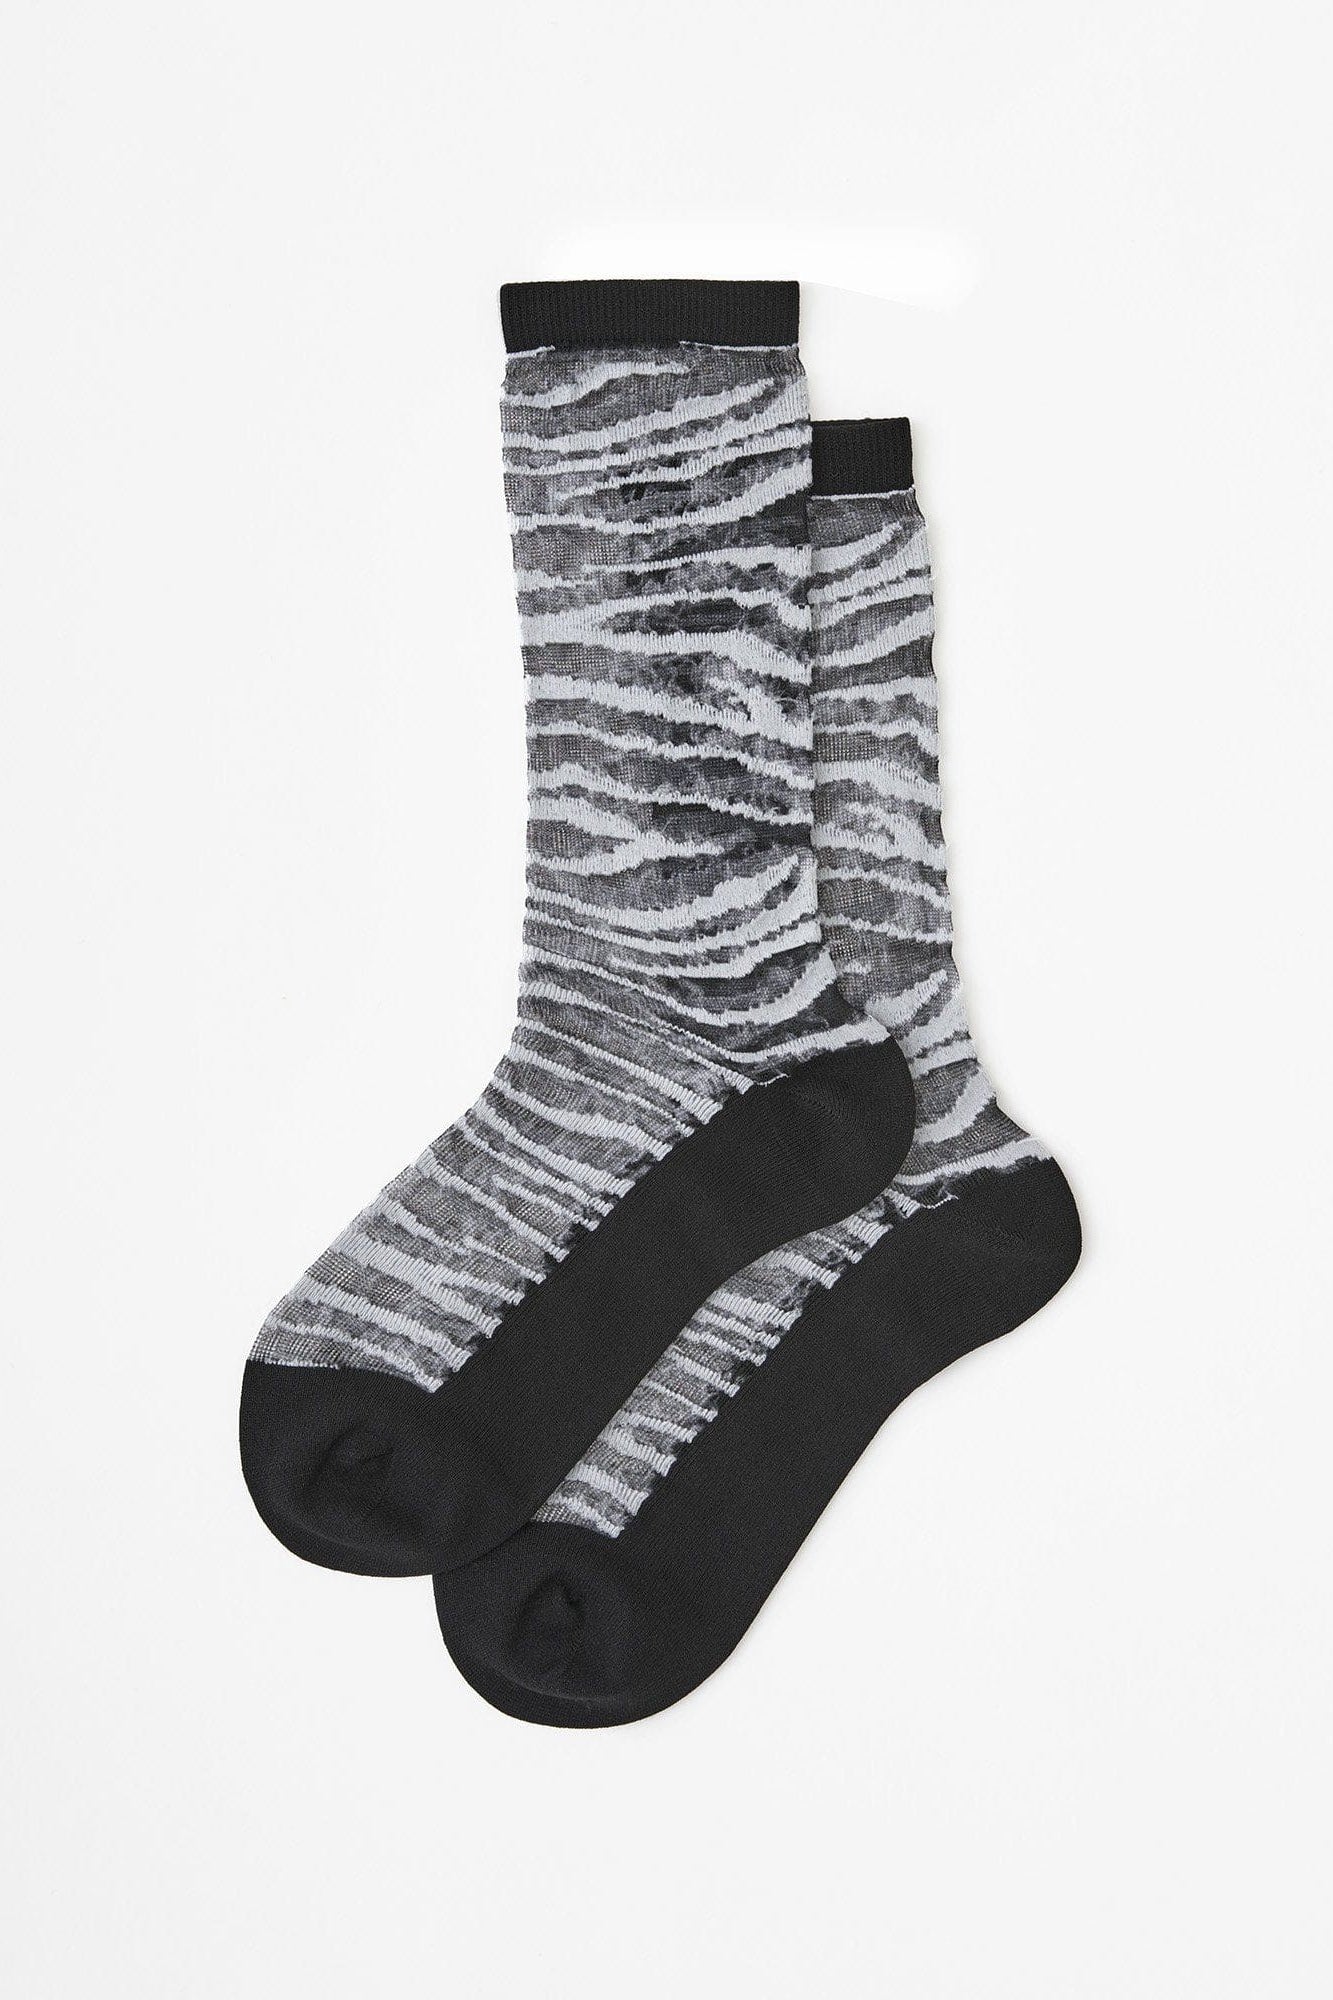 static-mesh-socks1